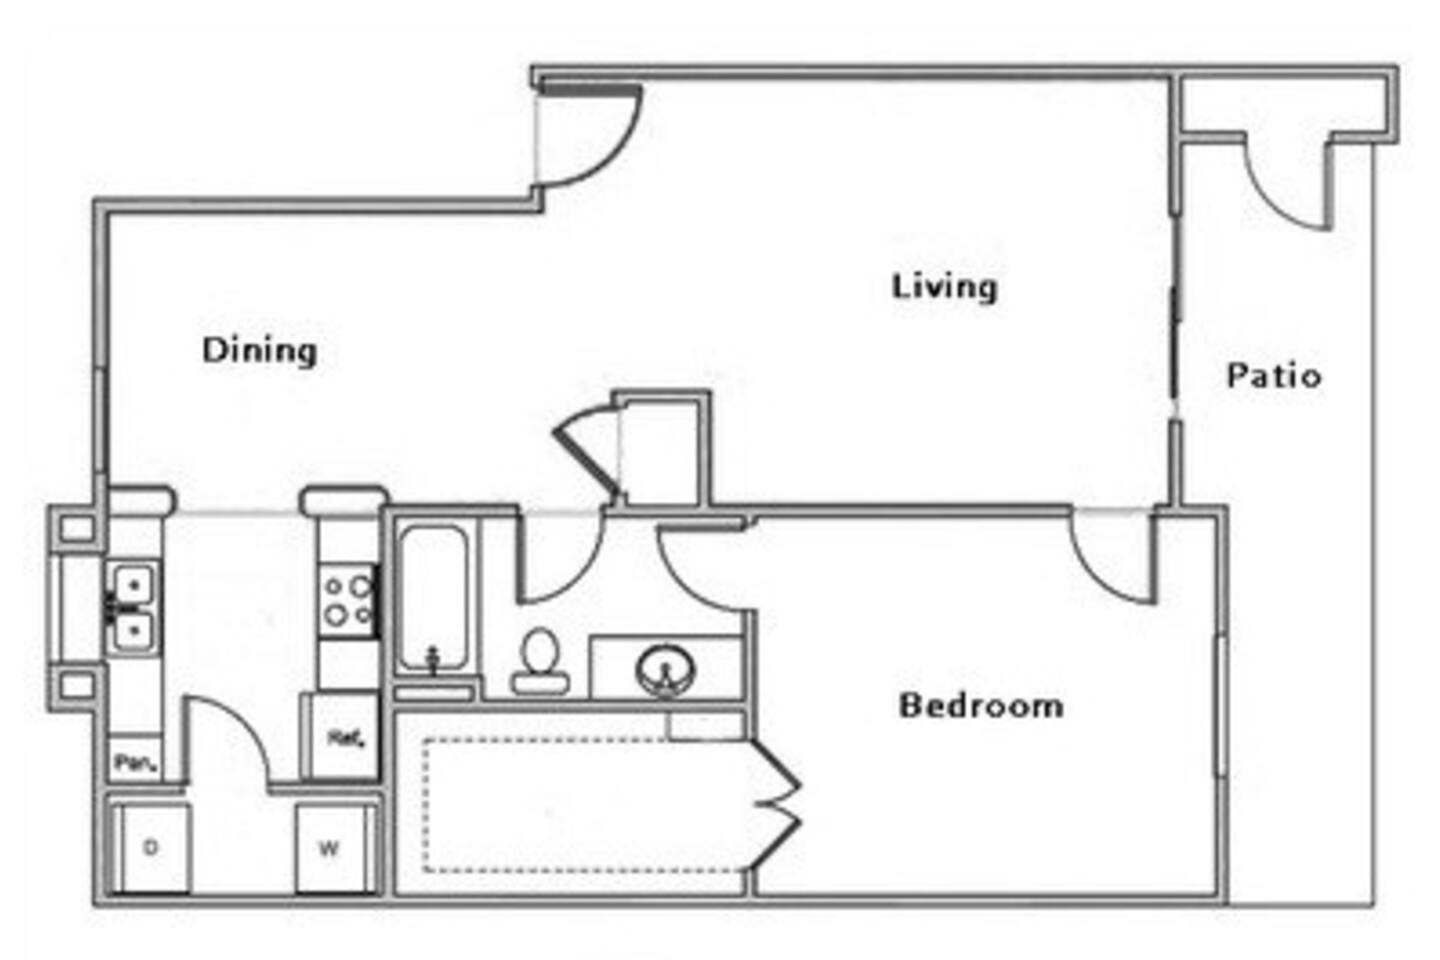 Floorplan diagram for A2, showing 1 bedroom